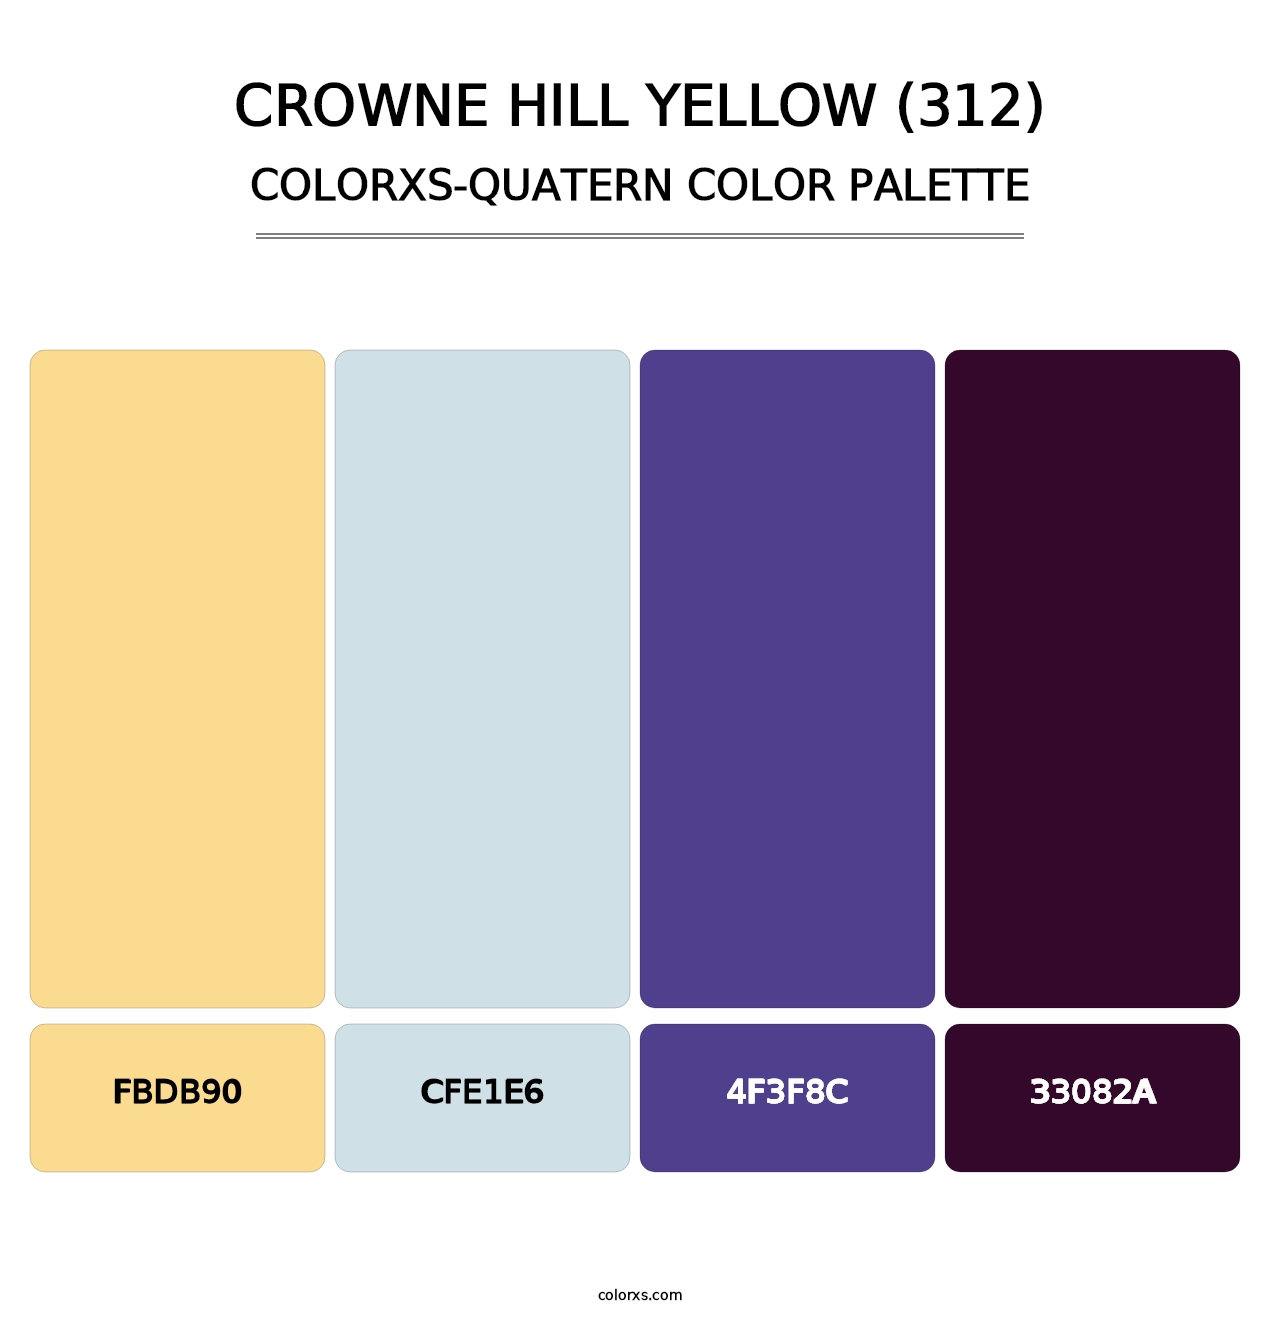 Crowne Hill Yellow (312) - Colorxs Quatern Palette